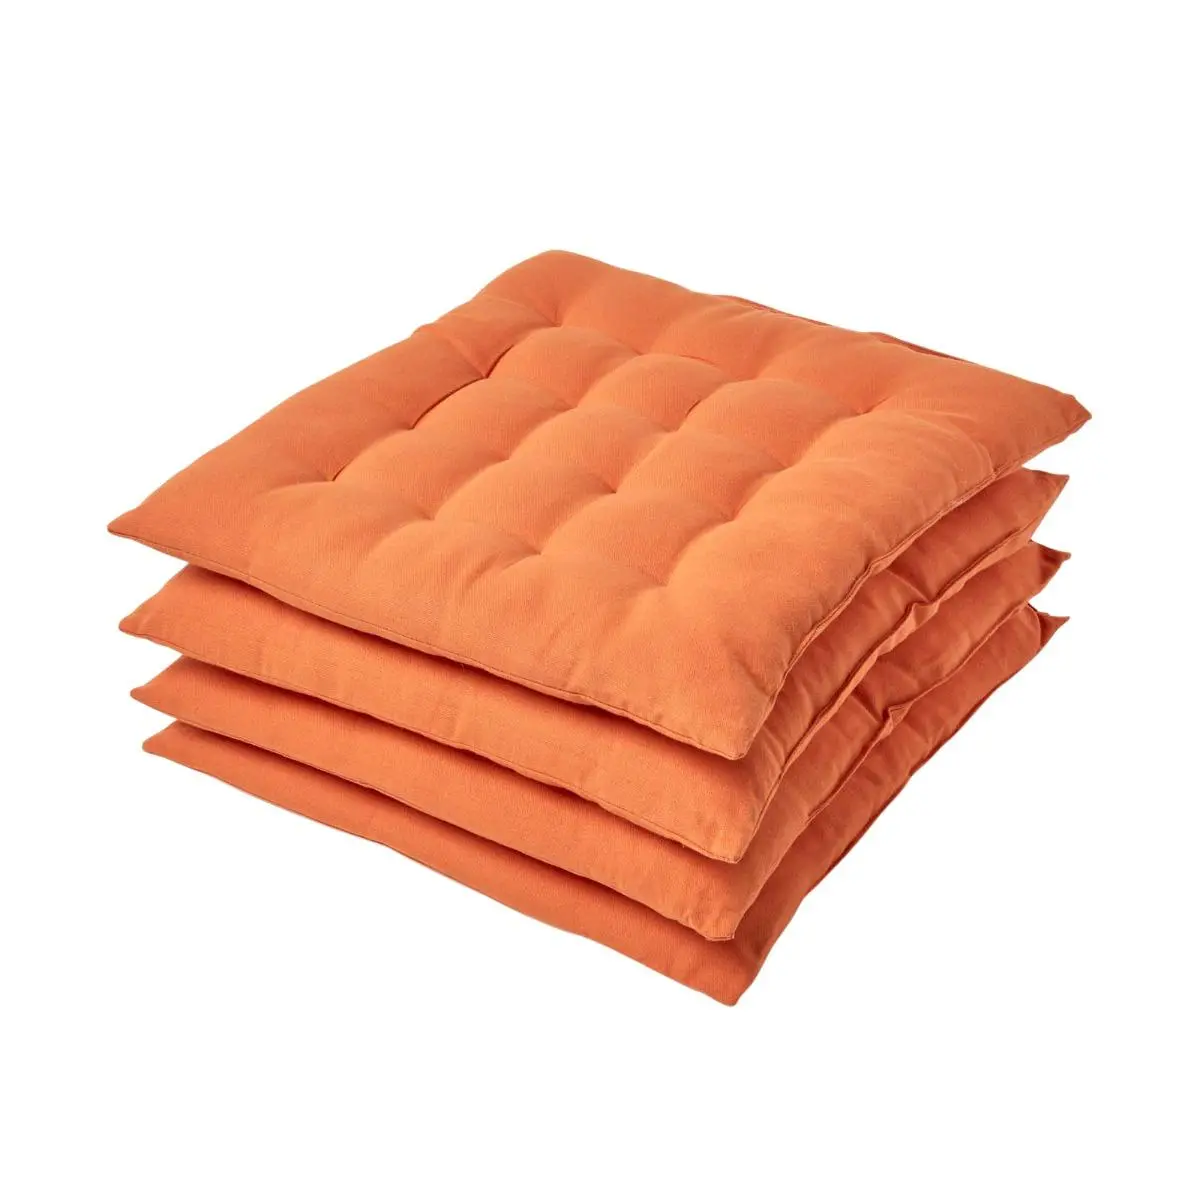 Burnt Orange Plain Seat Pad With On, Orange Dining Room Chair Cushions